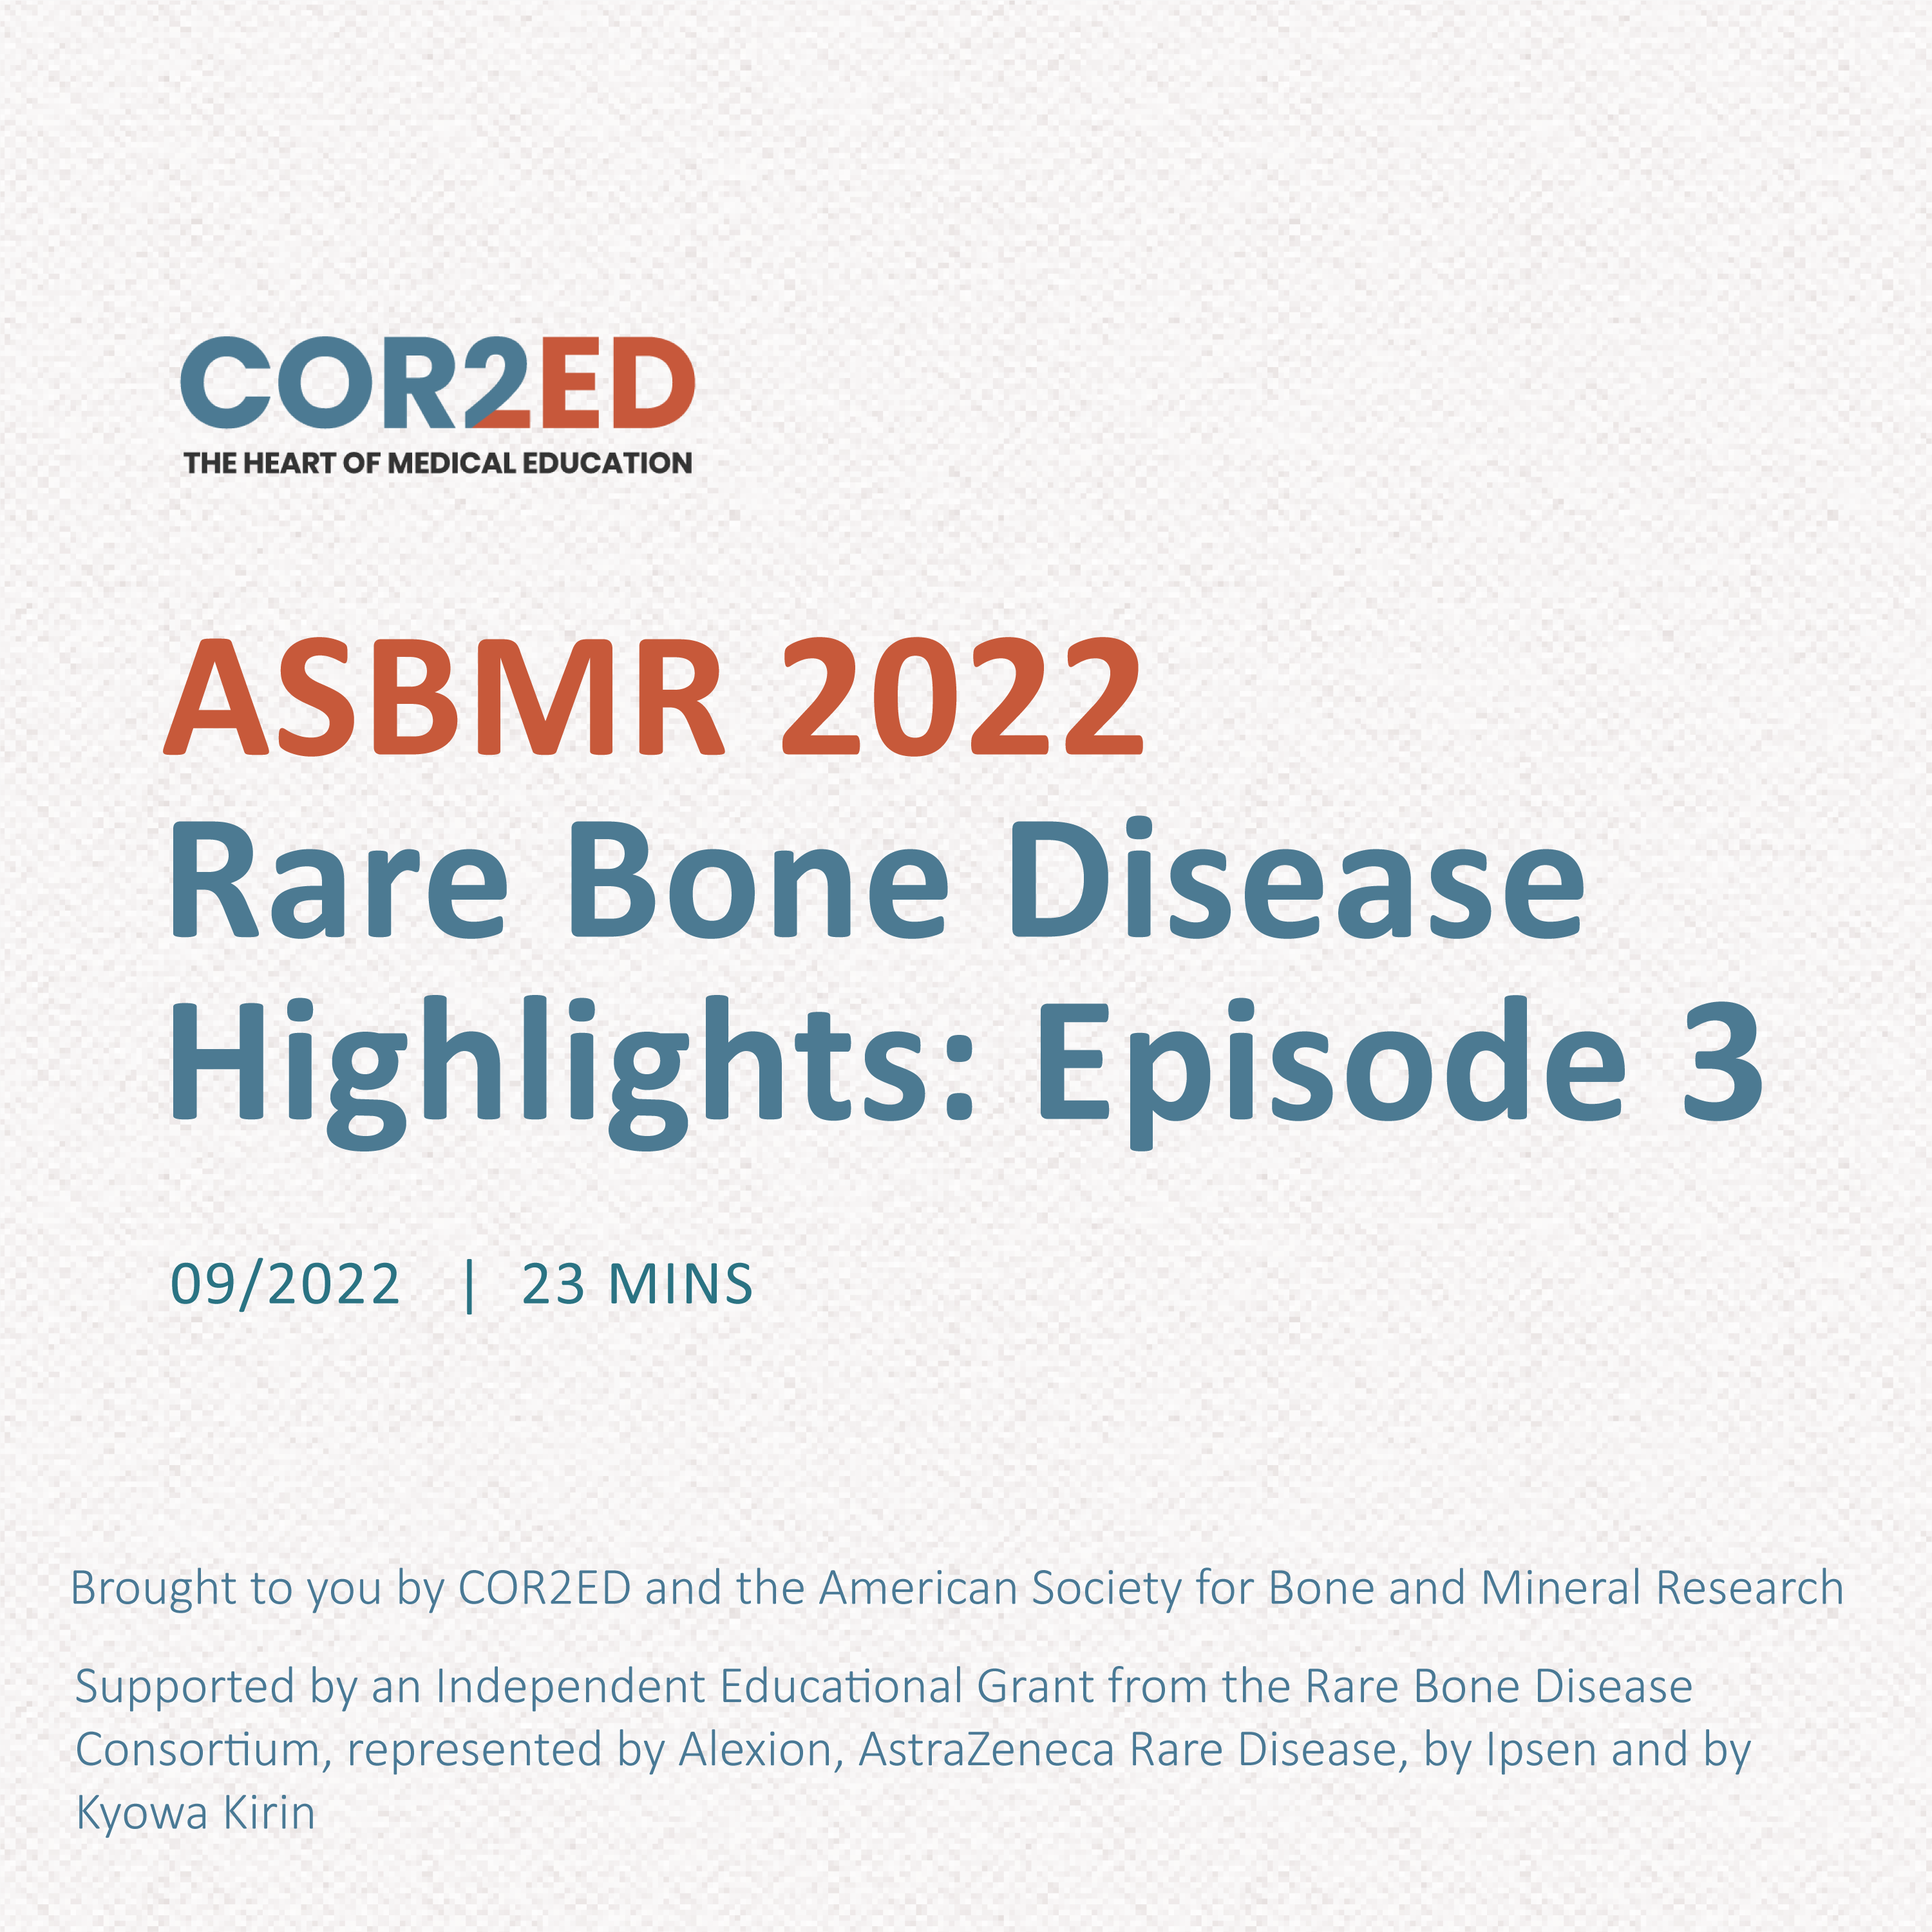 ASBMR 2022 Rare Bone Disease Highlights: Episode 3